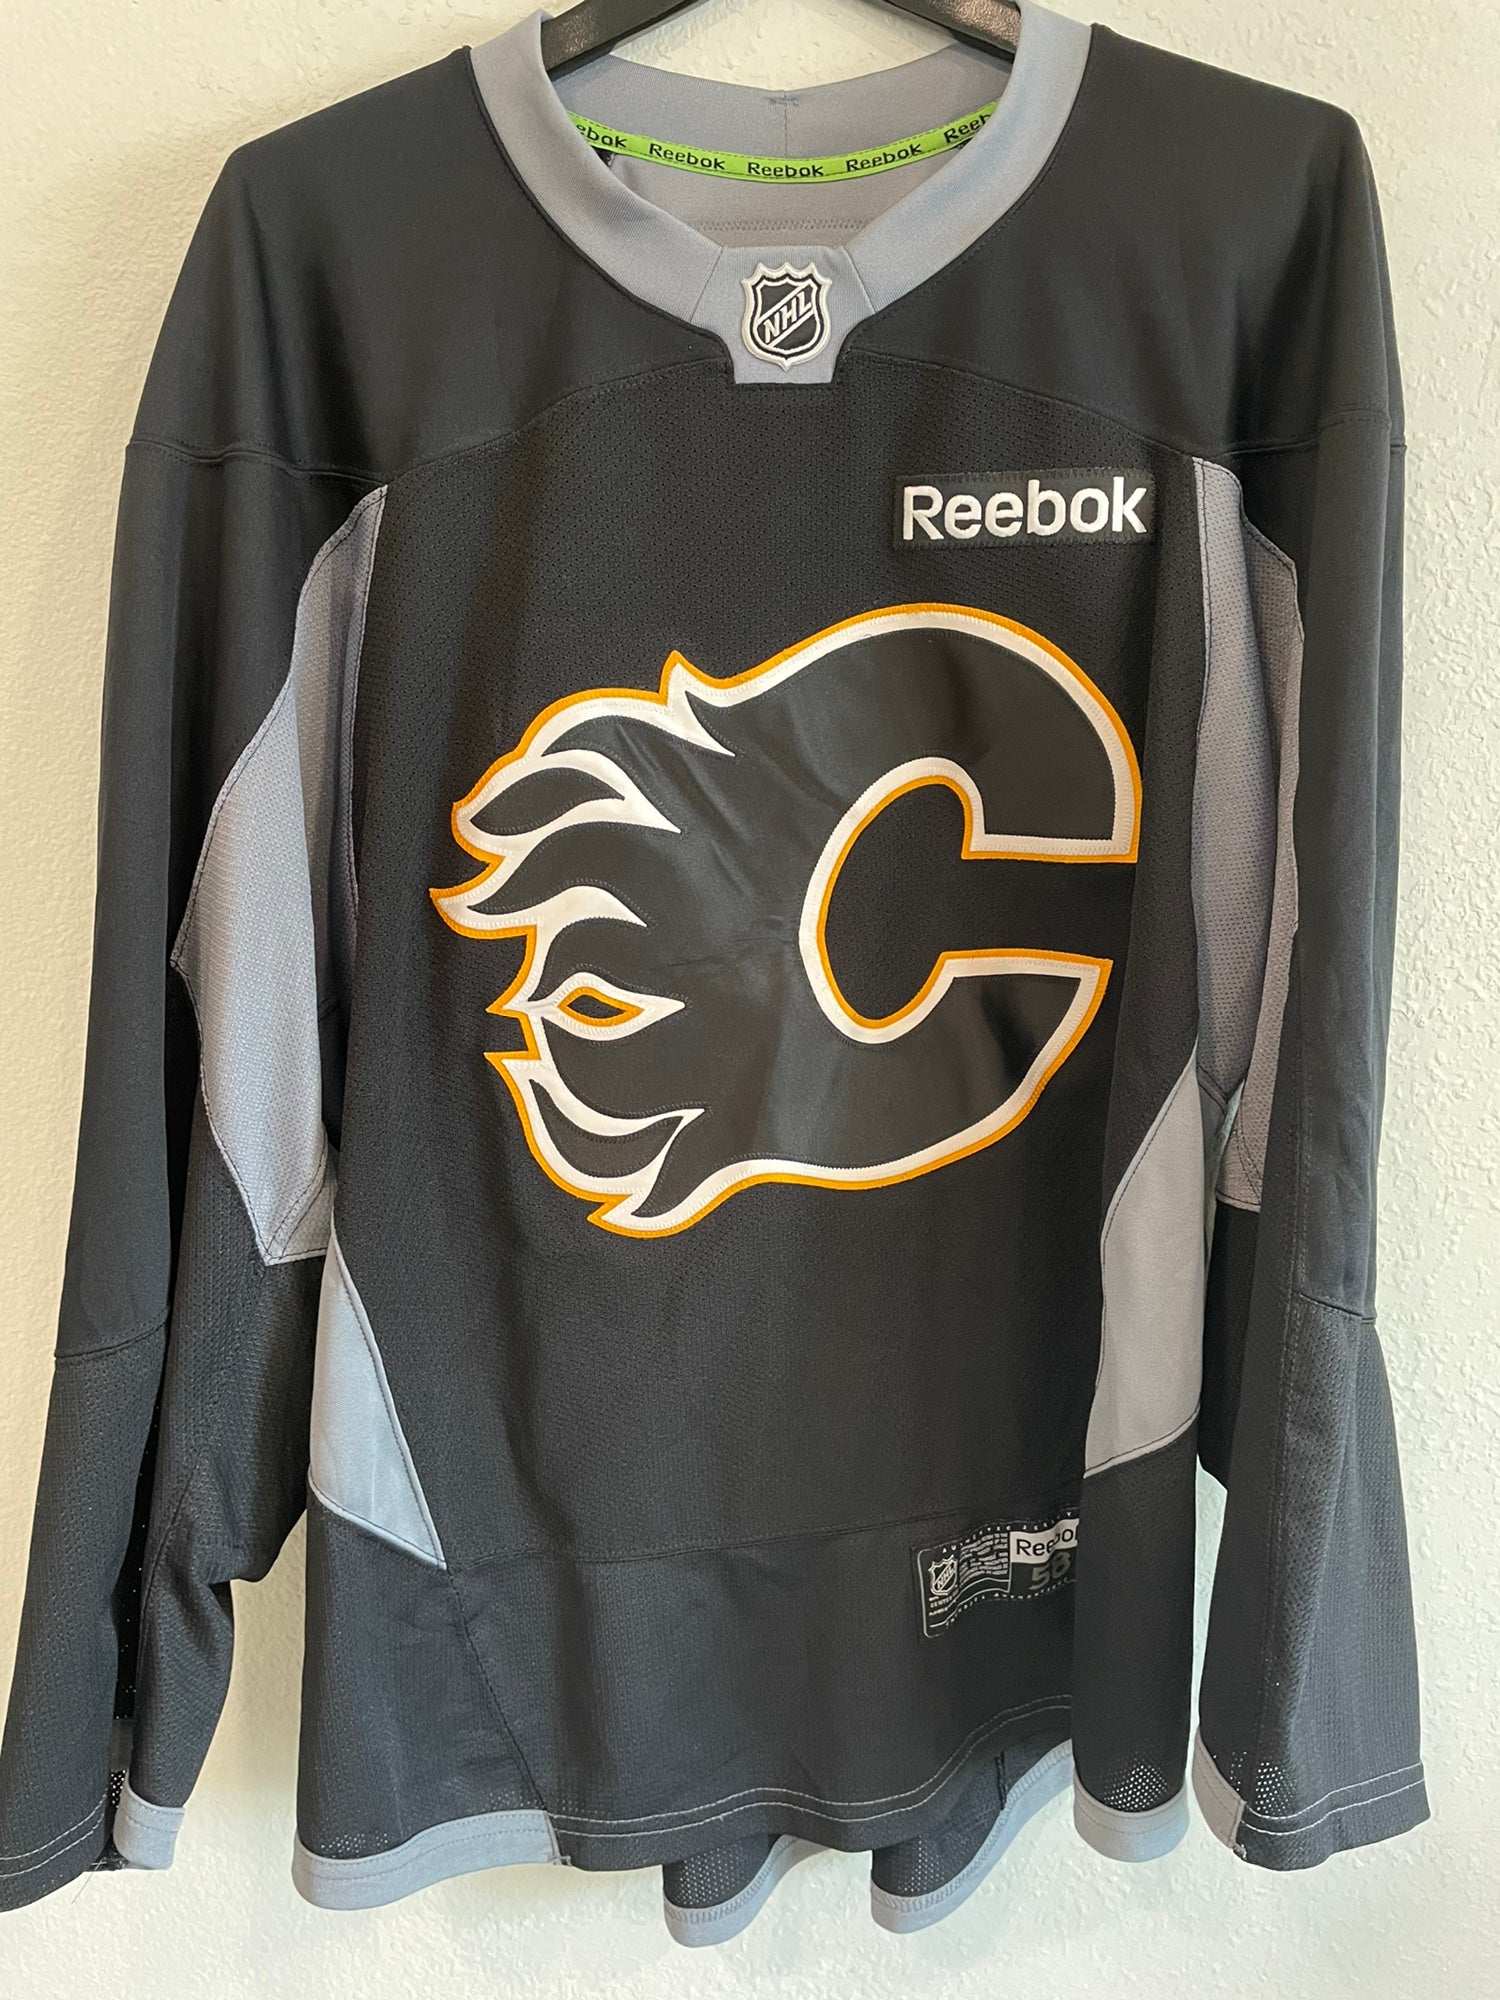 Reebok Reebok hockey jersey Calgary flames